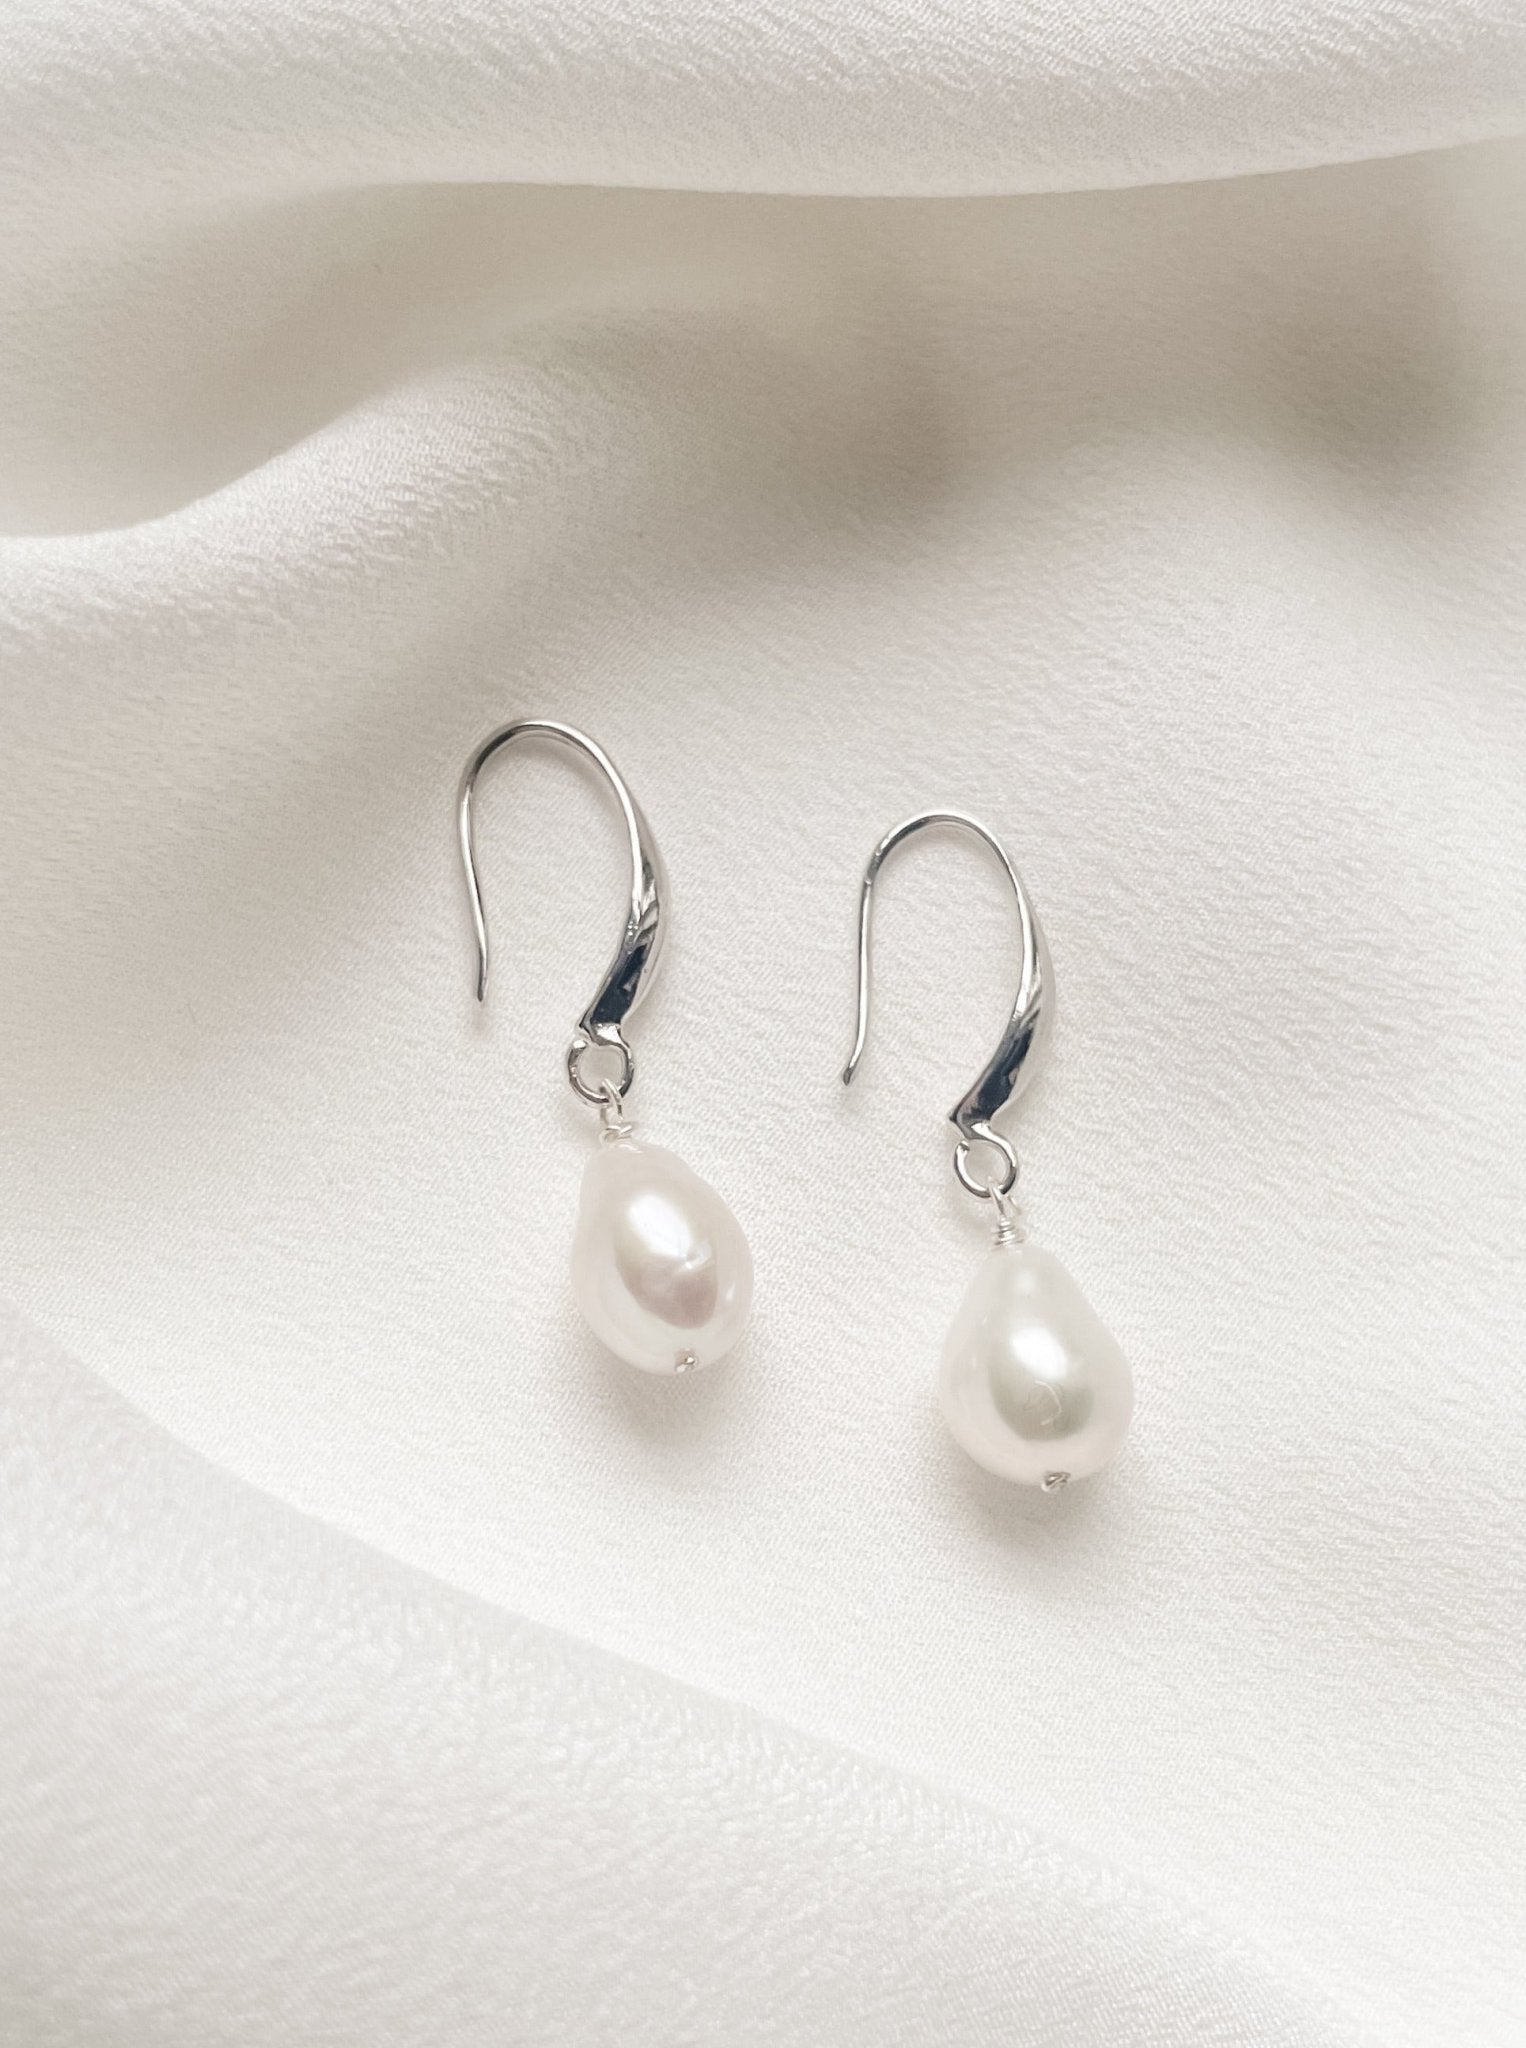 Aria silver teardrop freshwater pearl French hook earrings debbiecarlisle.com £45